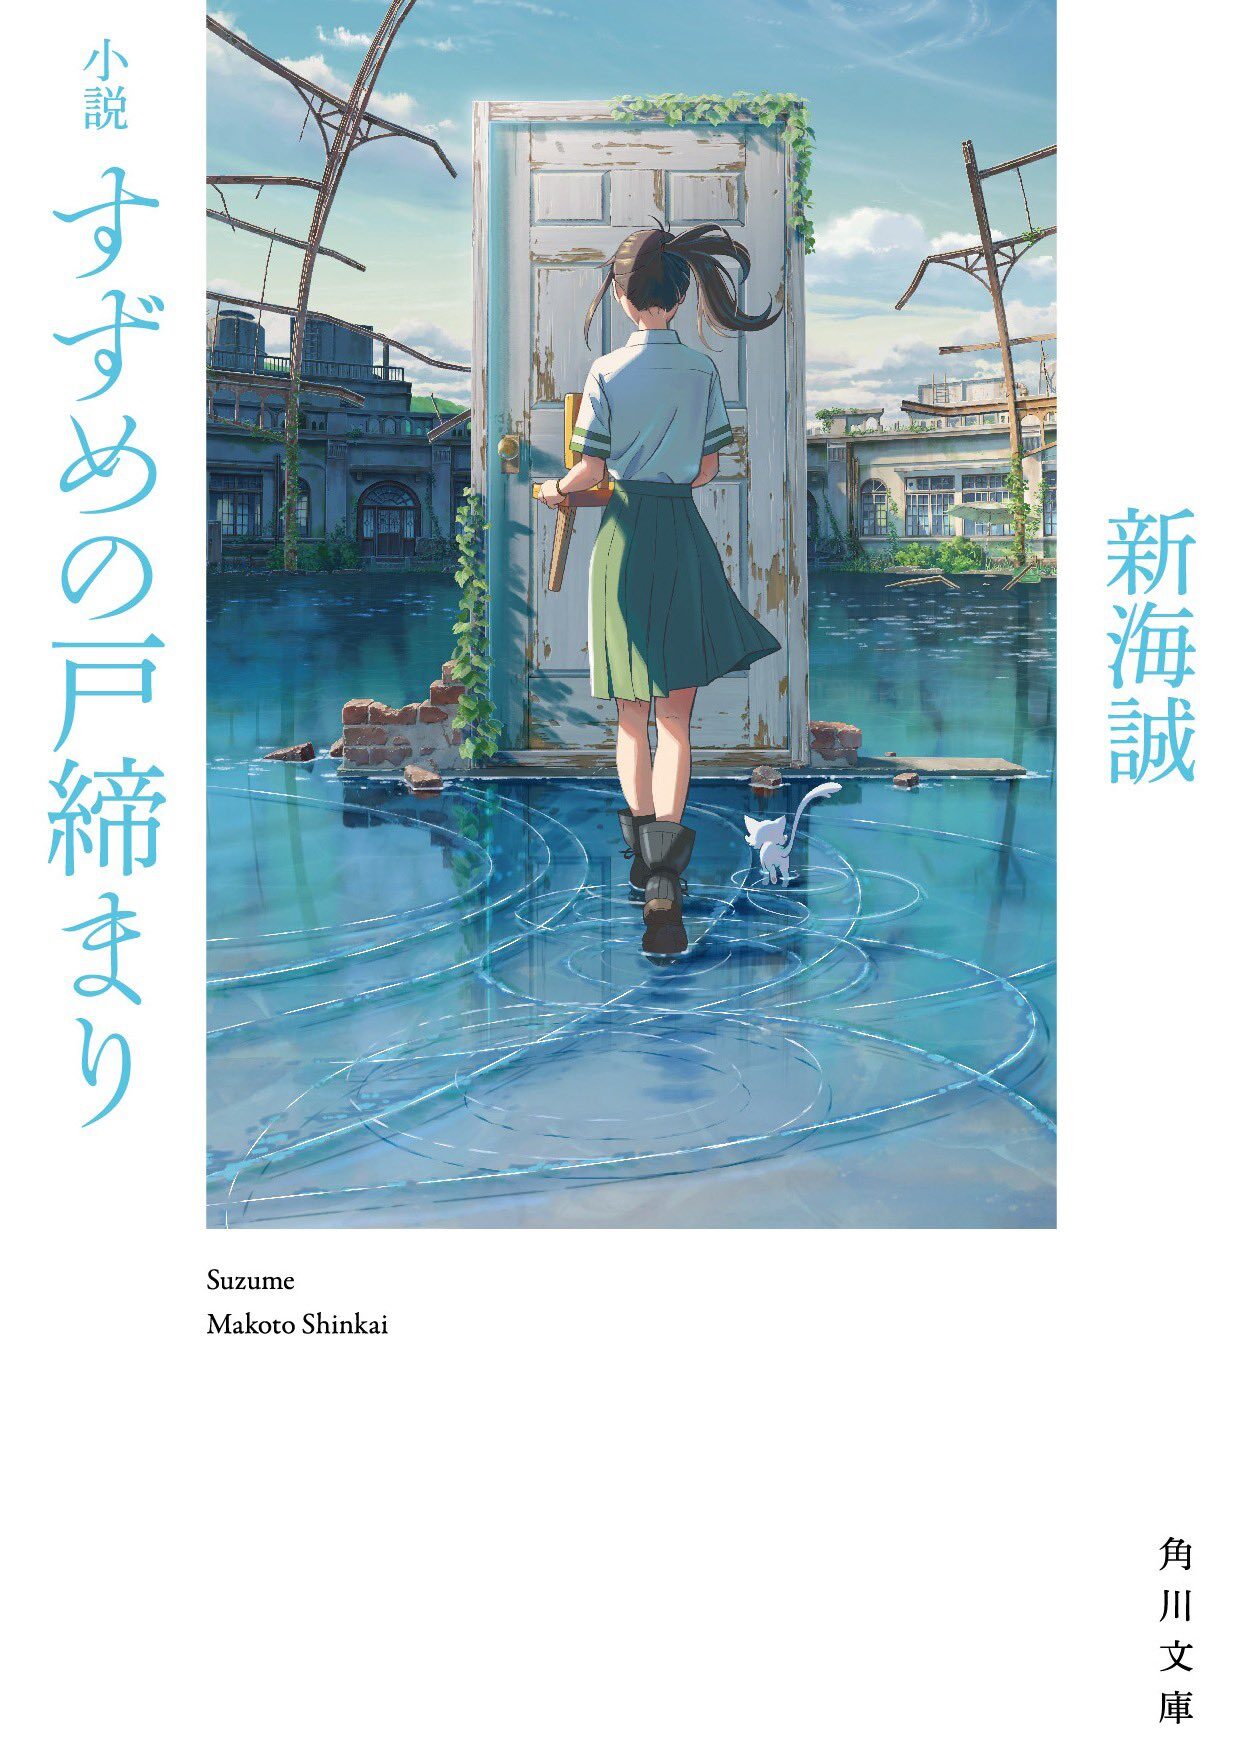 Suzume no tojimari cover image
